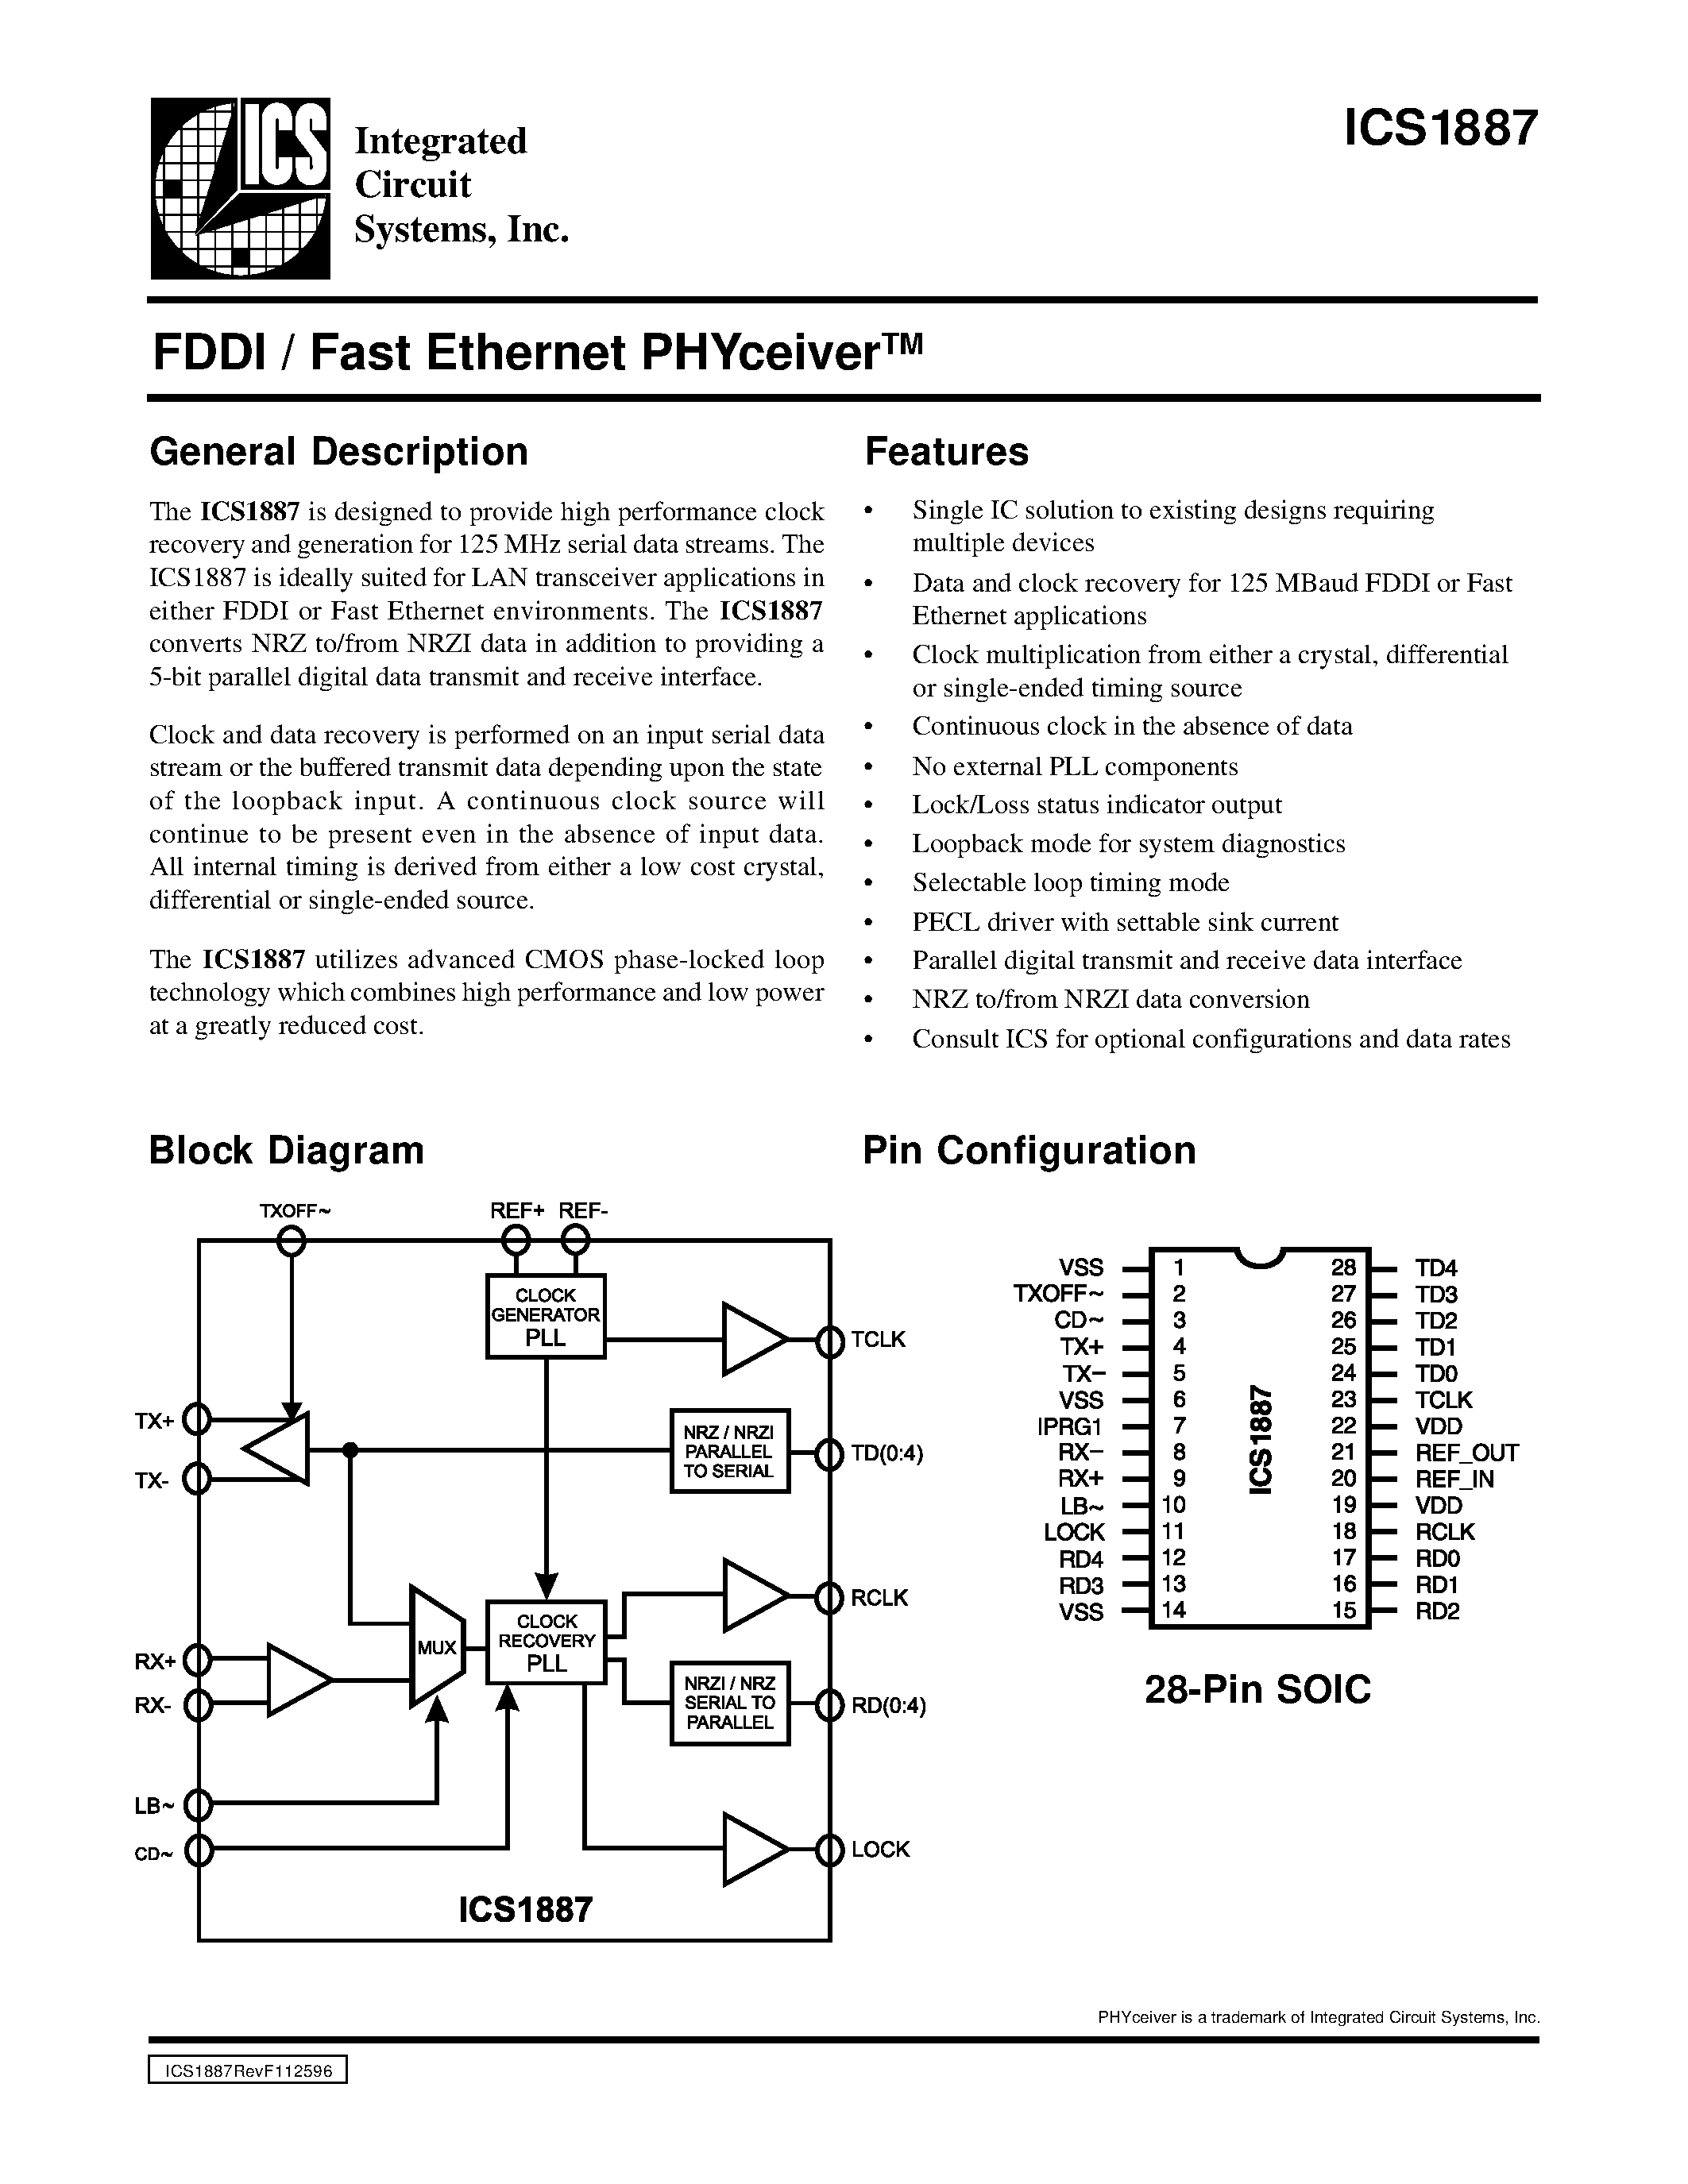 Даташит ICS1887 - FDDI / Fast Ethernet PHYceiverTM страница 1